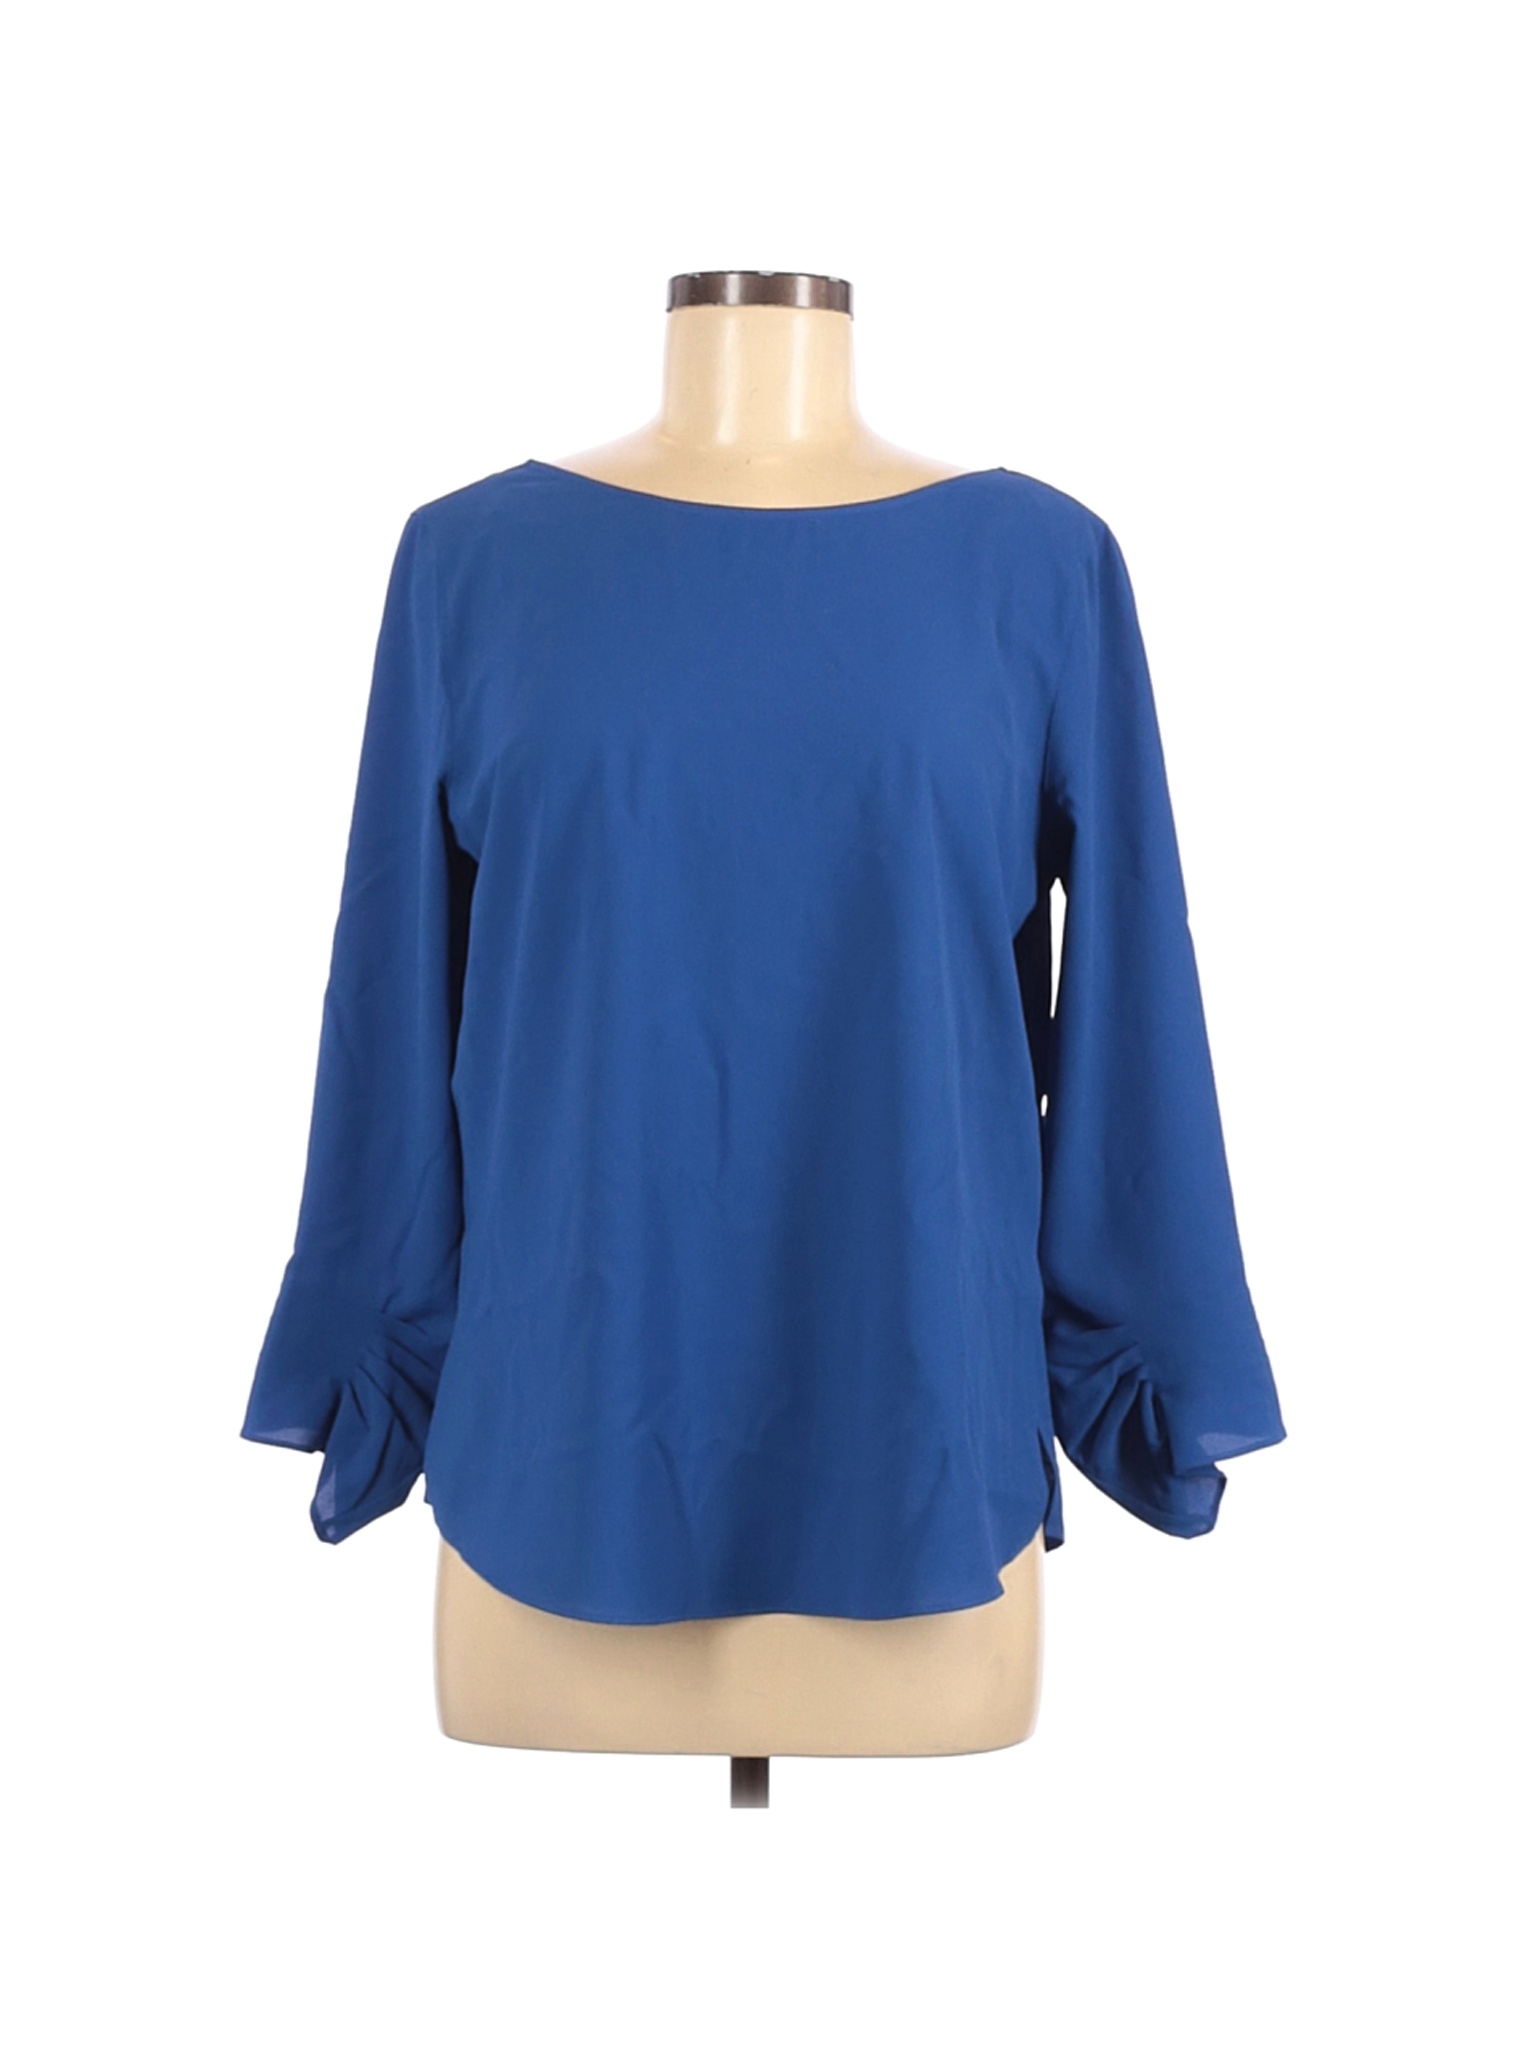 NWT Massimo Dutti Women Blue 3/4 Sleeve Blouse 8 | eBay